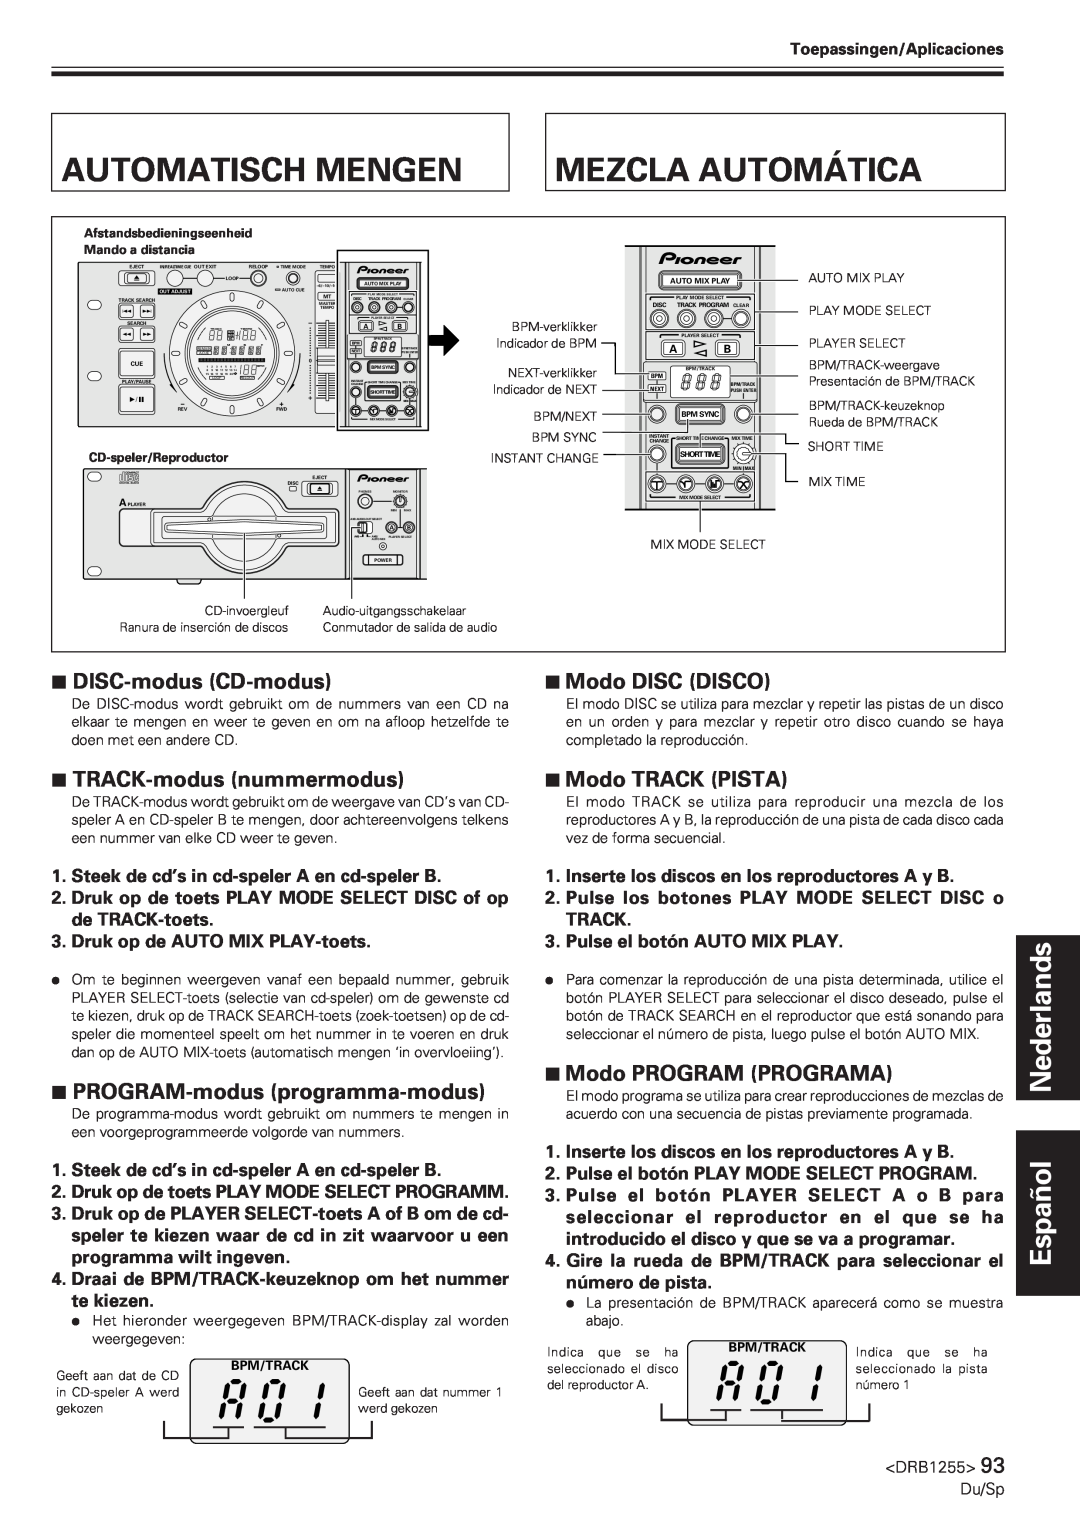 Pioneer CMX-5000 Automatisch Mengen, Mezcla Automática, DISC-modus CD-modus, 7Modo DISC DISCO, TRACK-modusnummermodus 